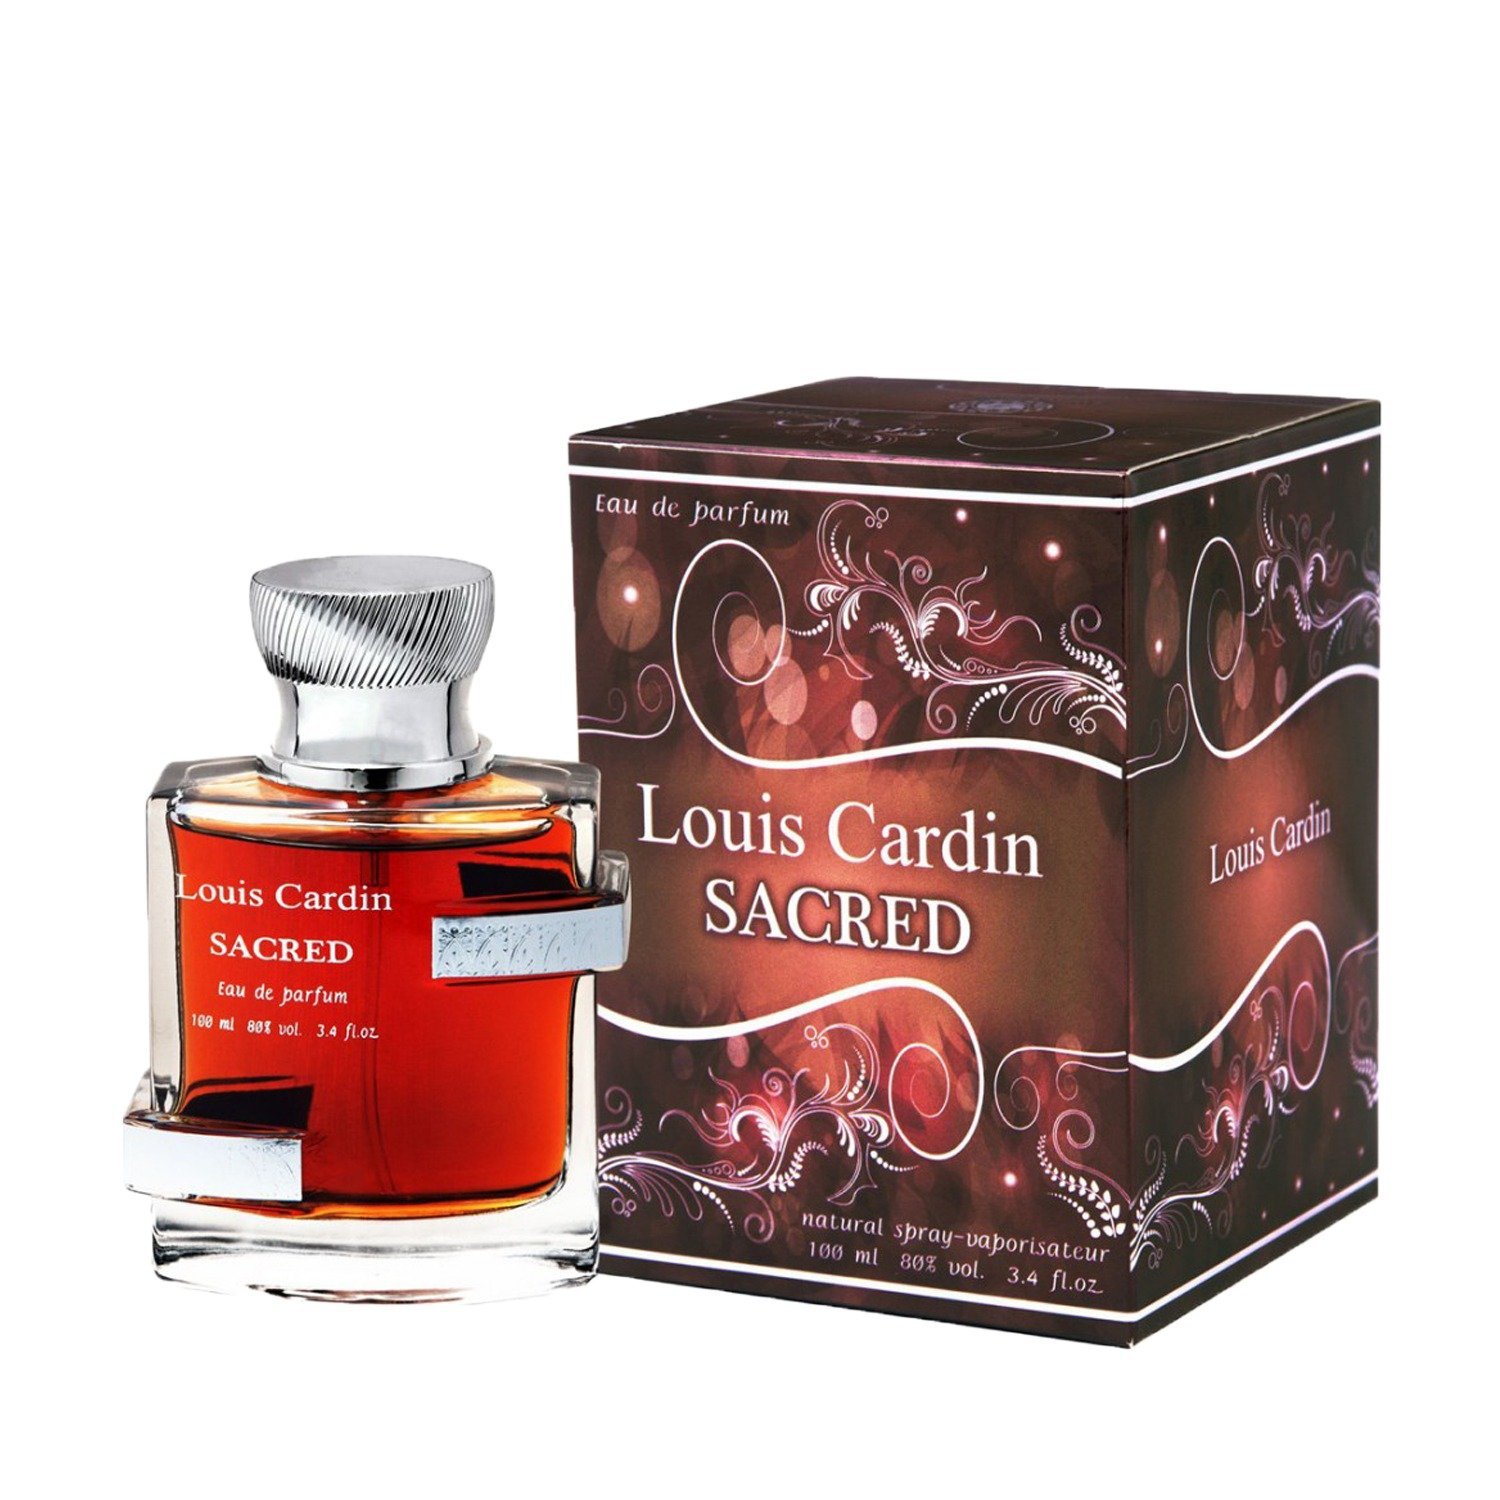 LOUIS CARDIN SACRED Eau De Parfum 100ml (Original formulation very strong)  £65.00 - PicClick UK